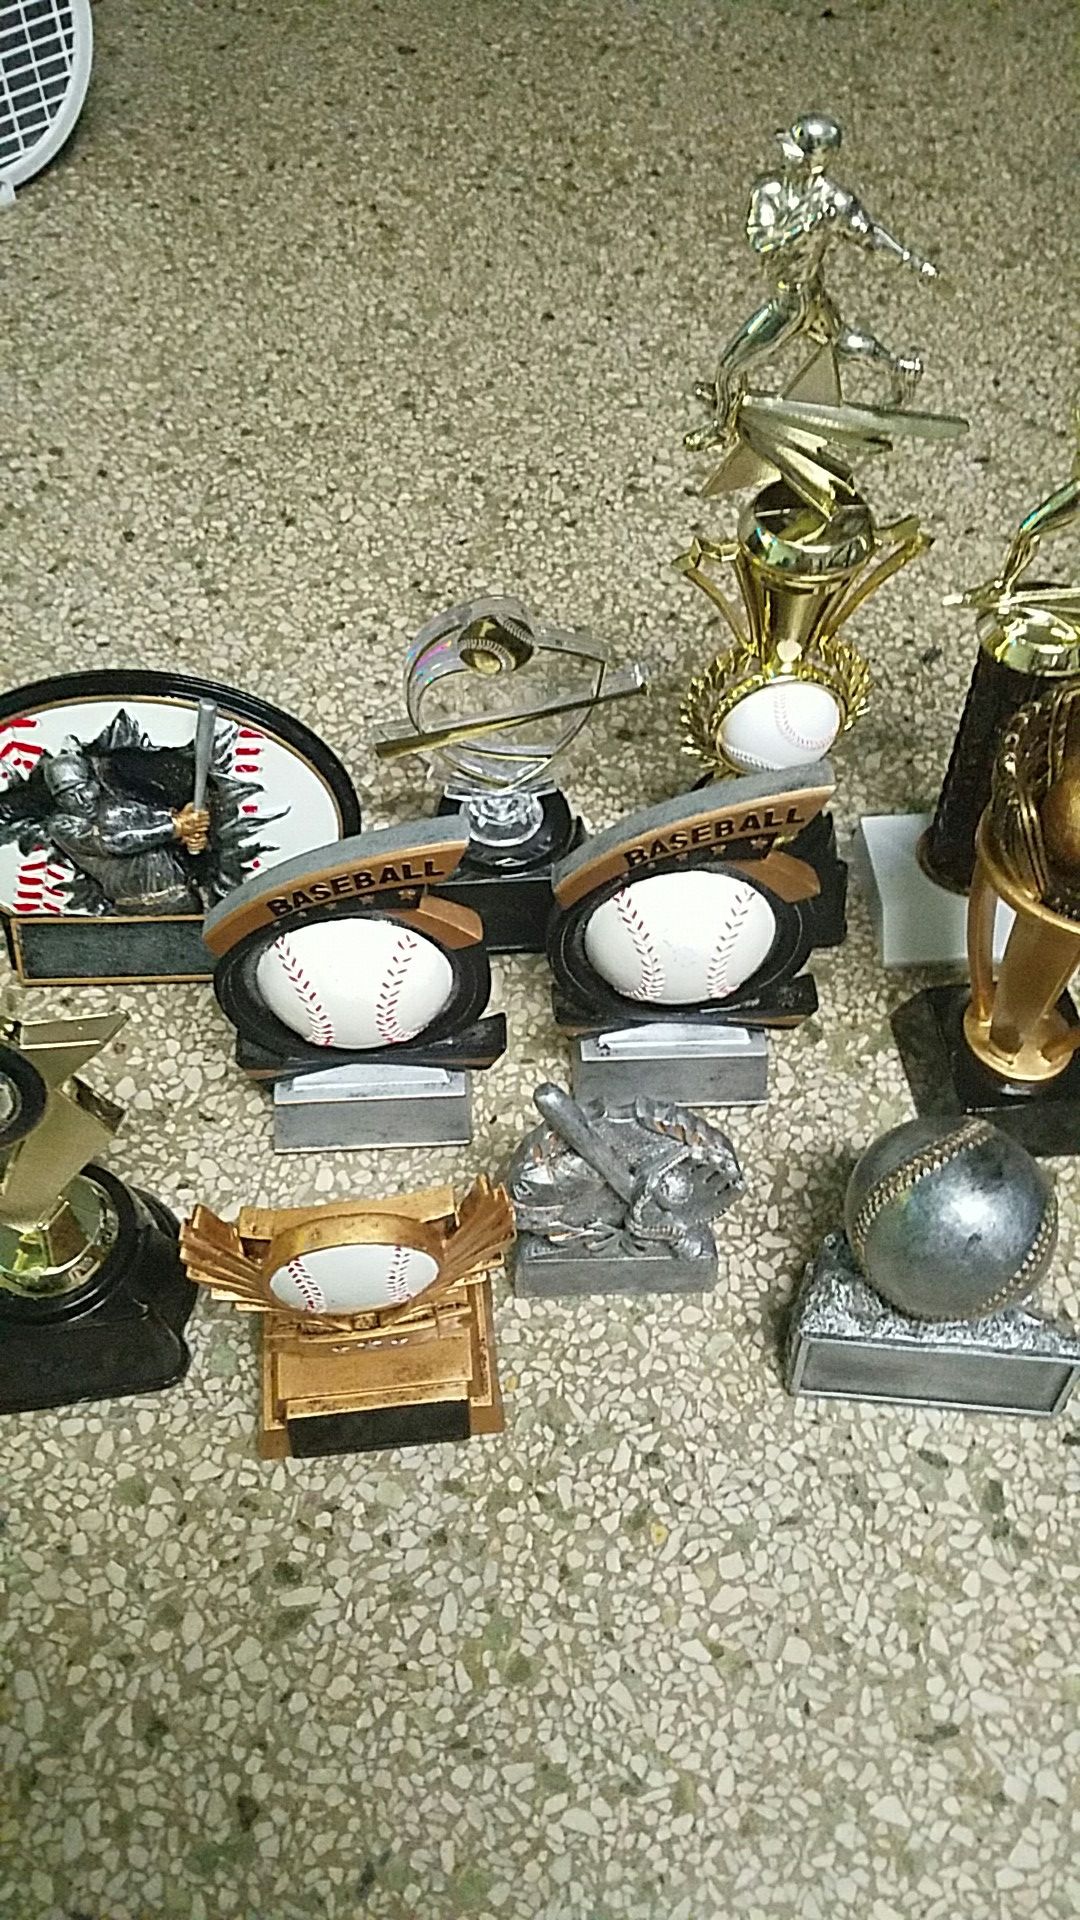 11 baseball trophies